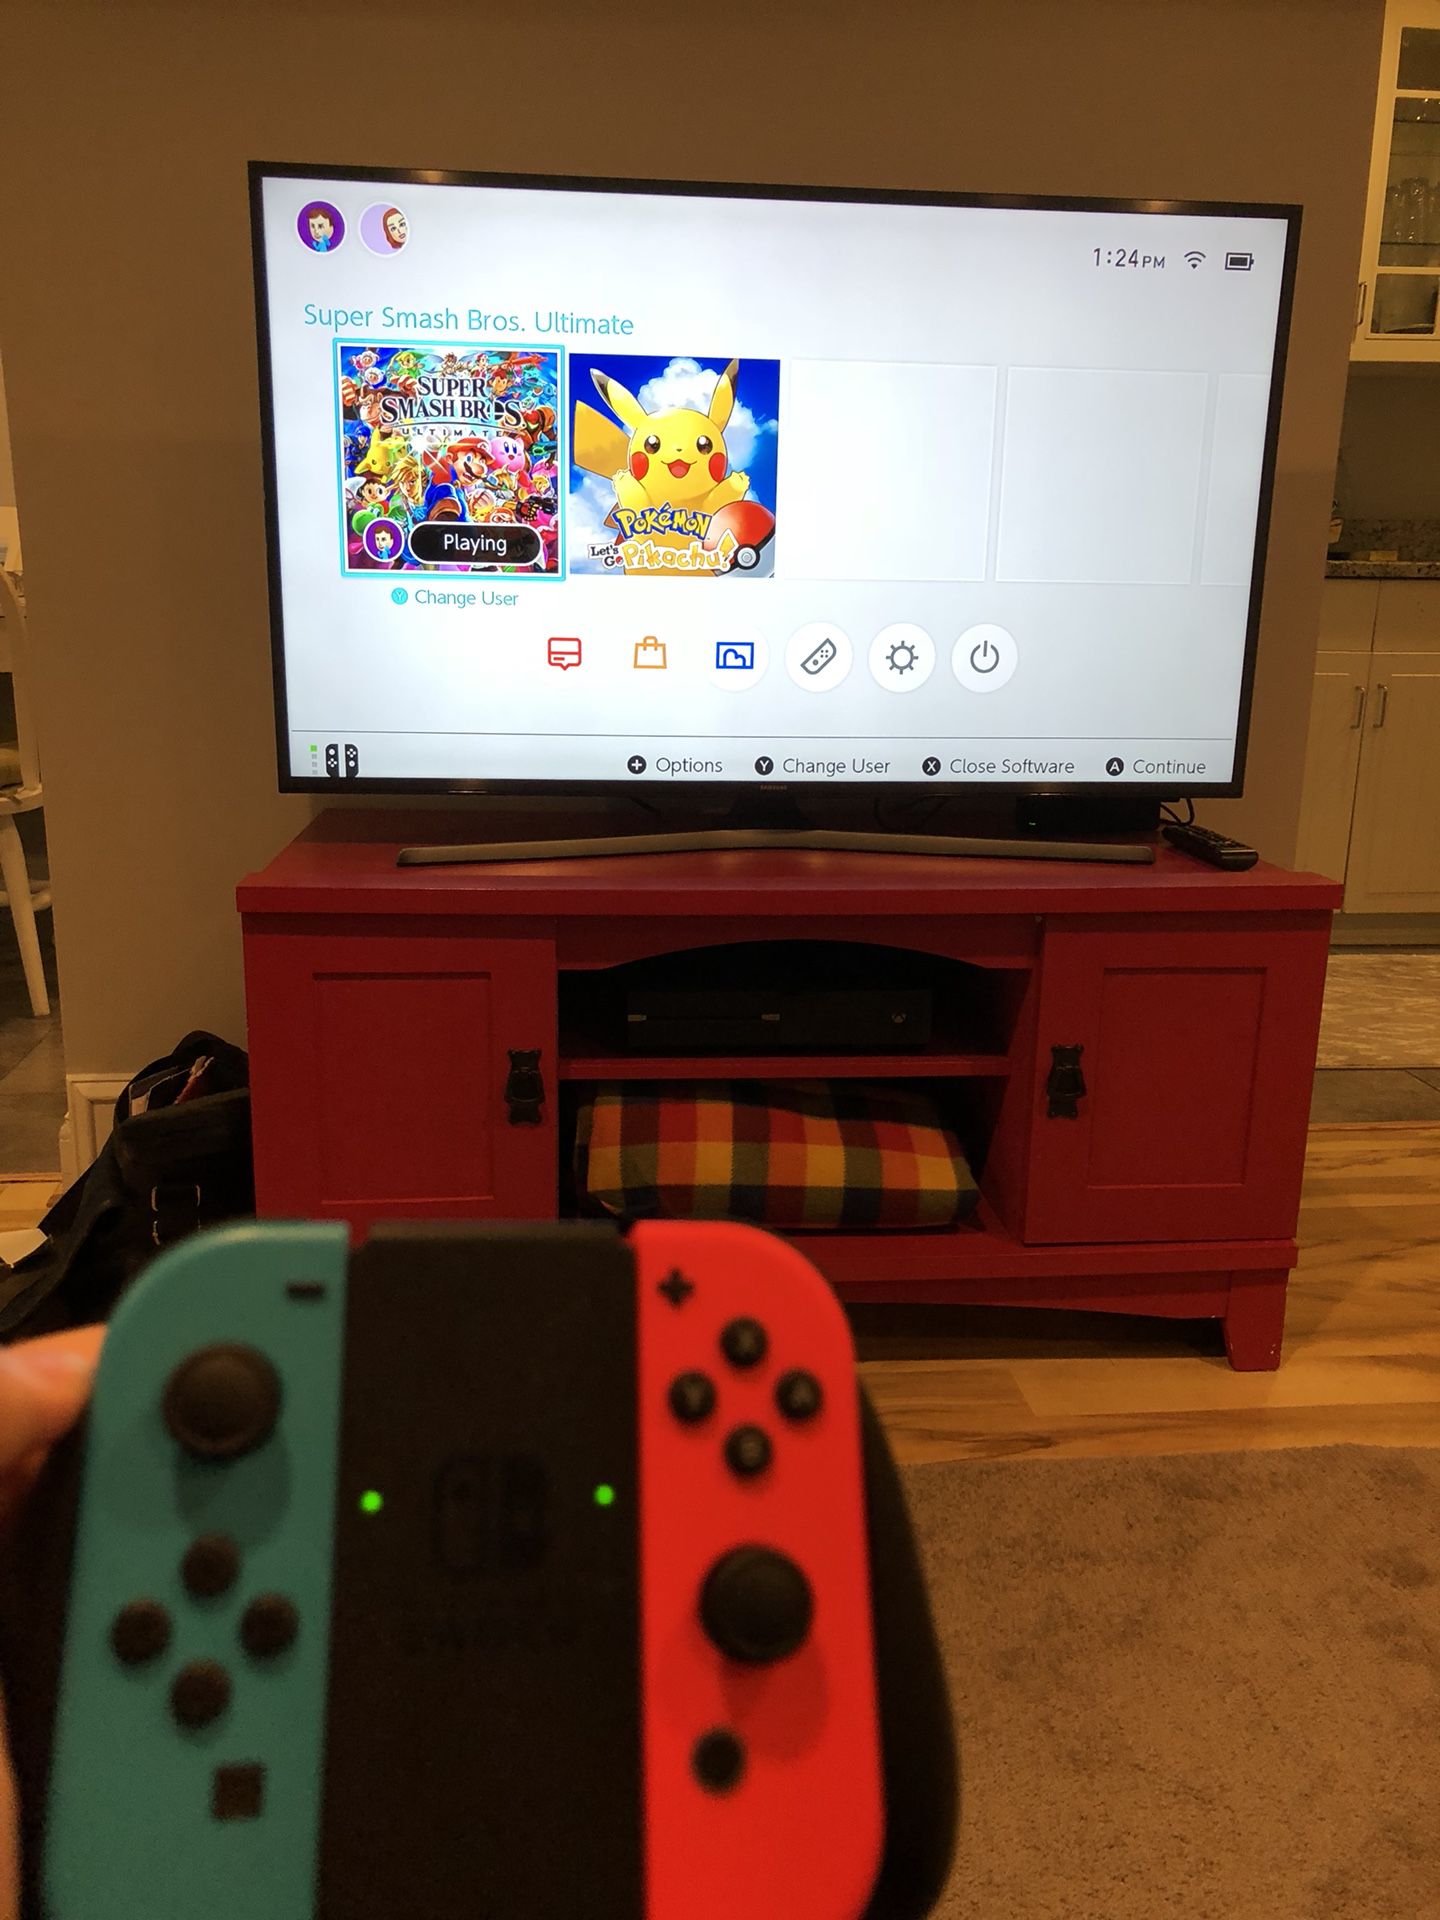 Nintendo Switch with Super Smash Bros and Pokémon Go